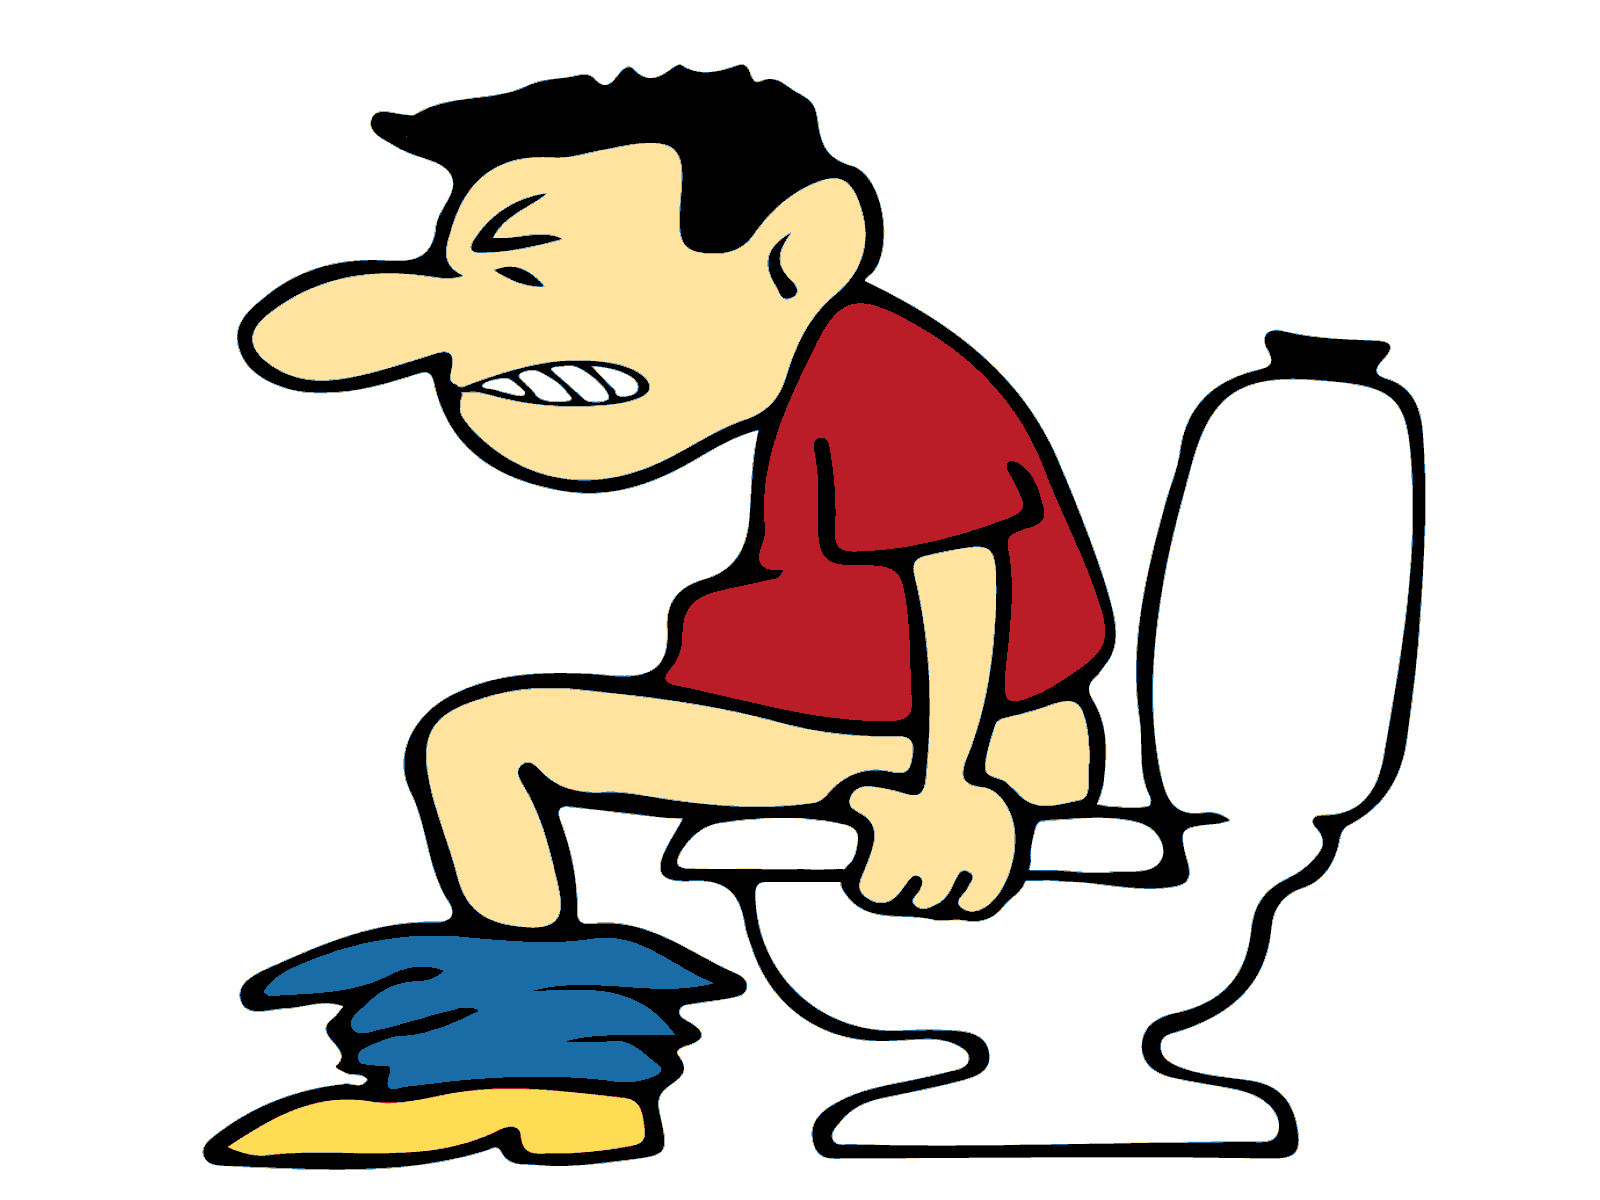 Painful Defecation 2danimation adobe illustrator animation cartoon character animation constipated design diarrhea illustration motion design toilet trying vector